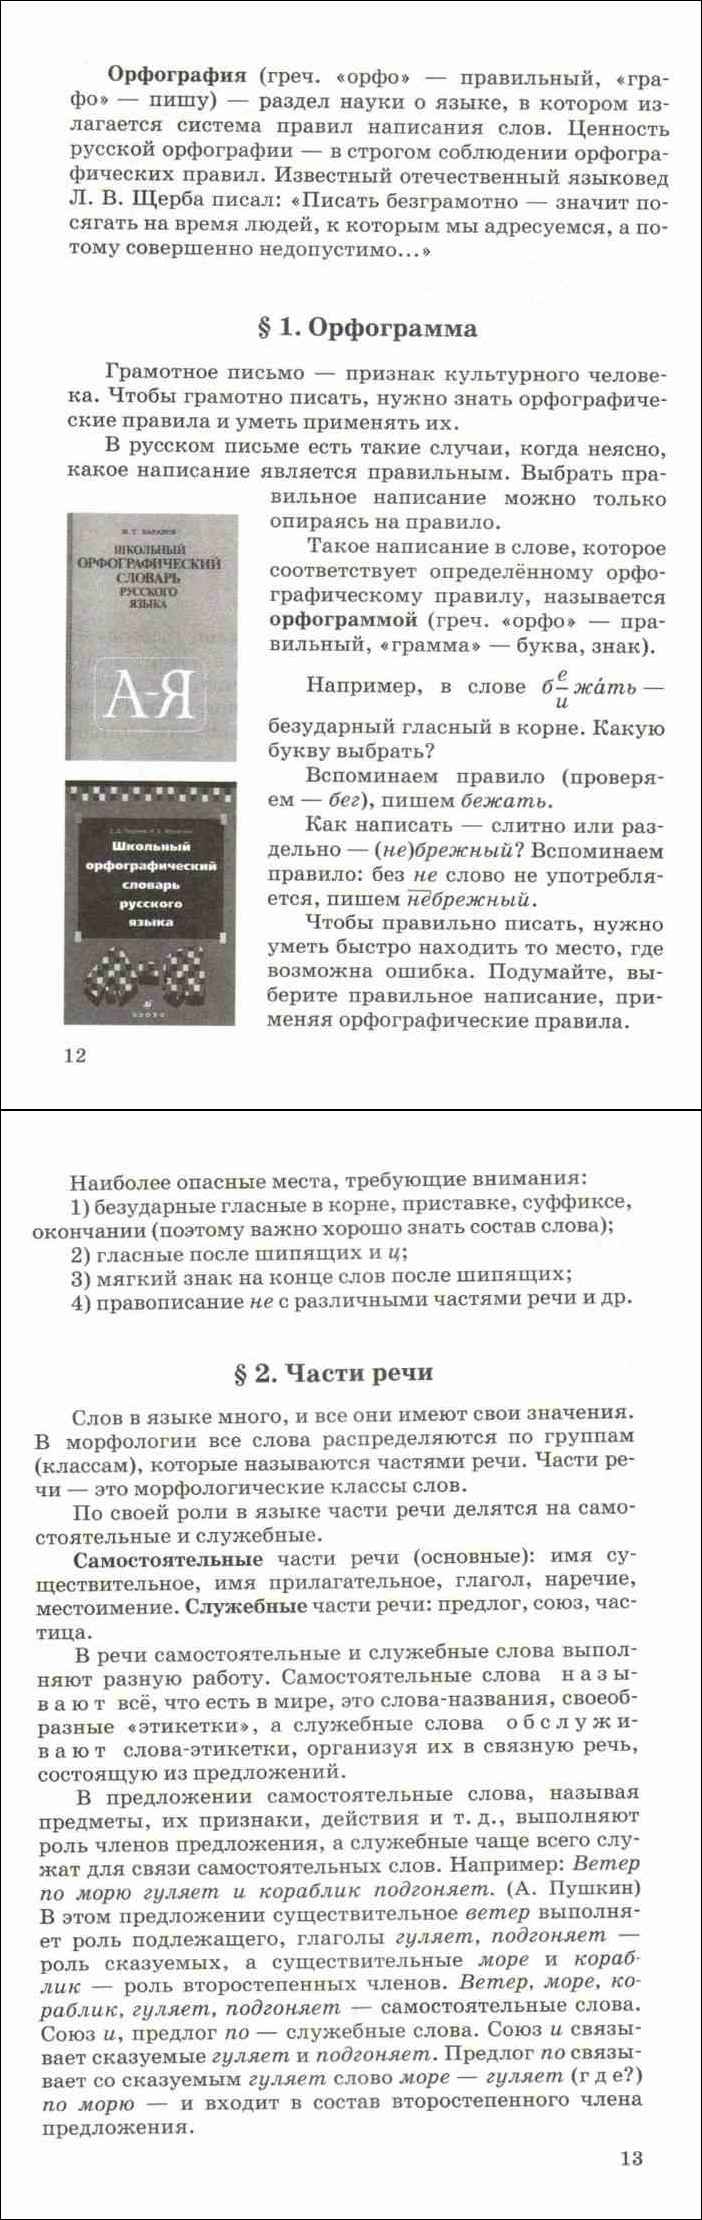 Бабайцева Чеснокова русский язык теория 5-9 классы.